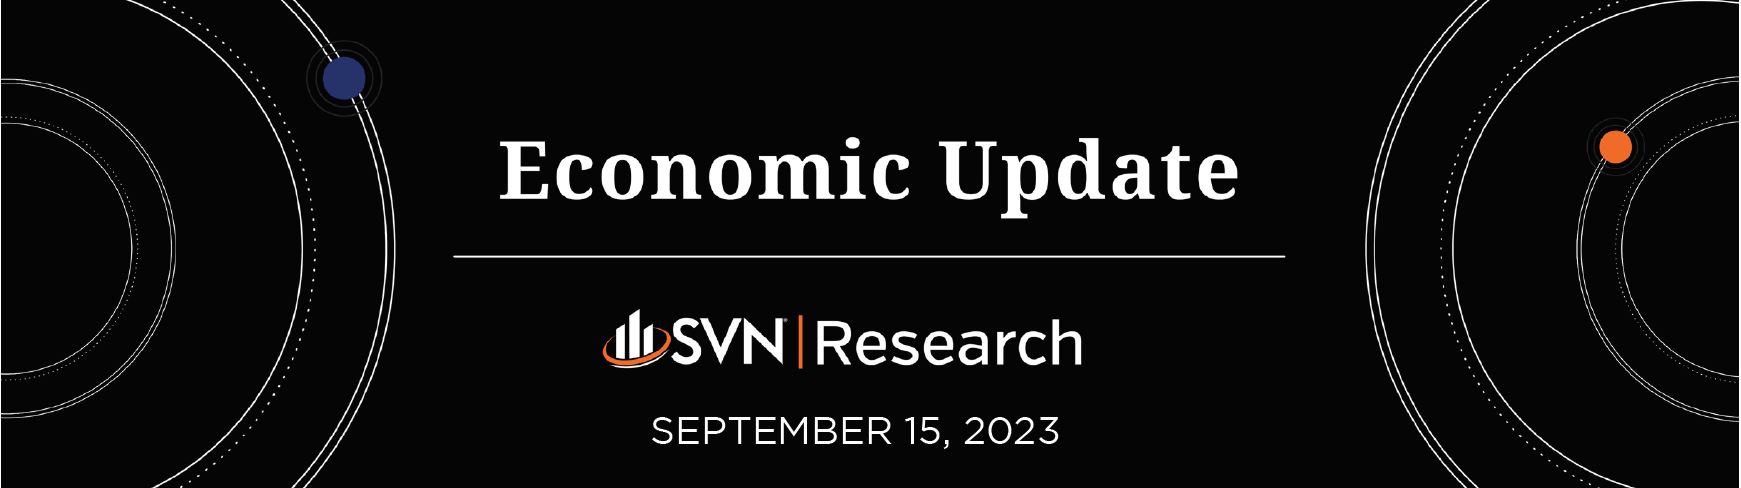 SVN | Research Economic Update 9.15.2023